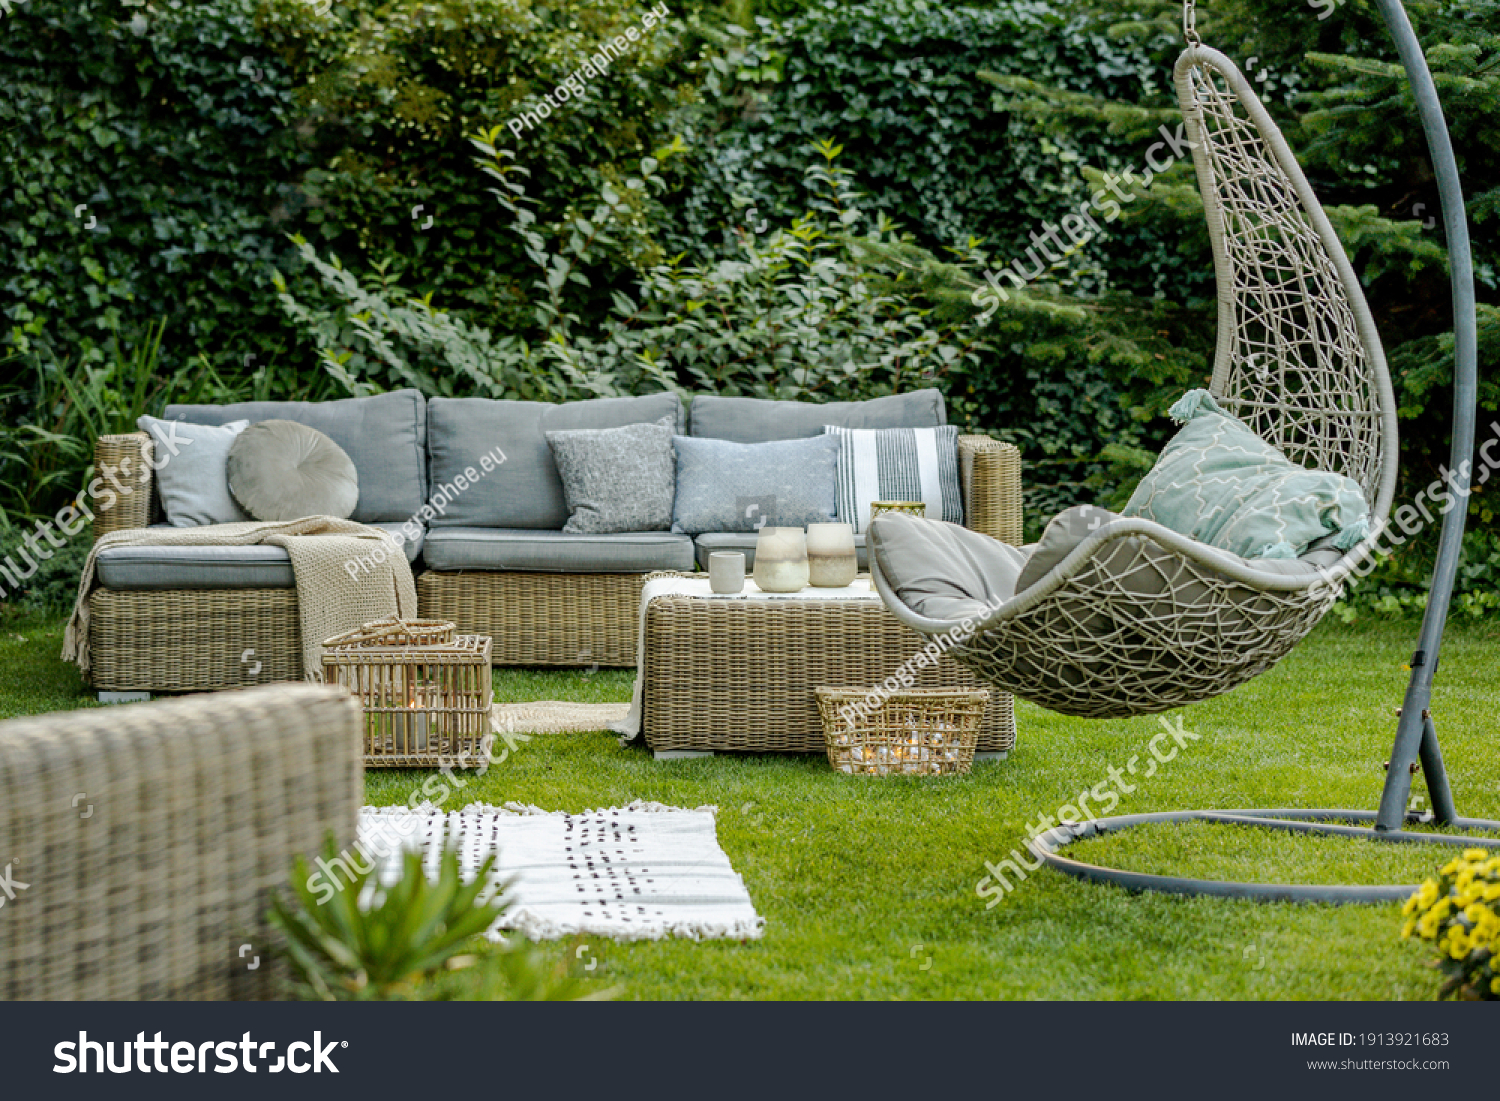 Comfortable wicker garden furniture with grey pillows in beautiful backyard #1913921683